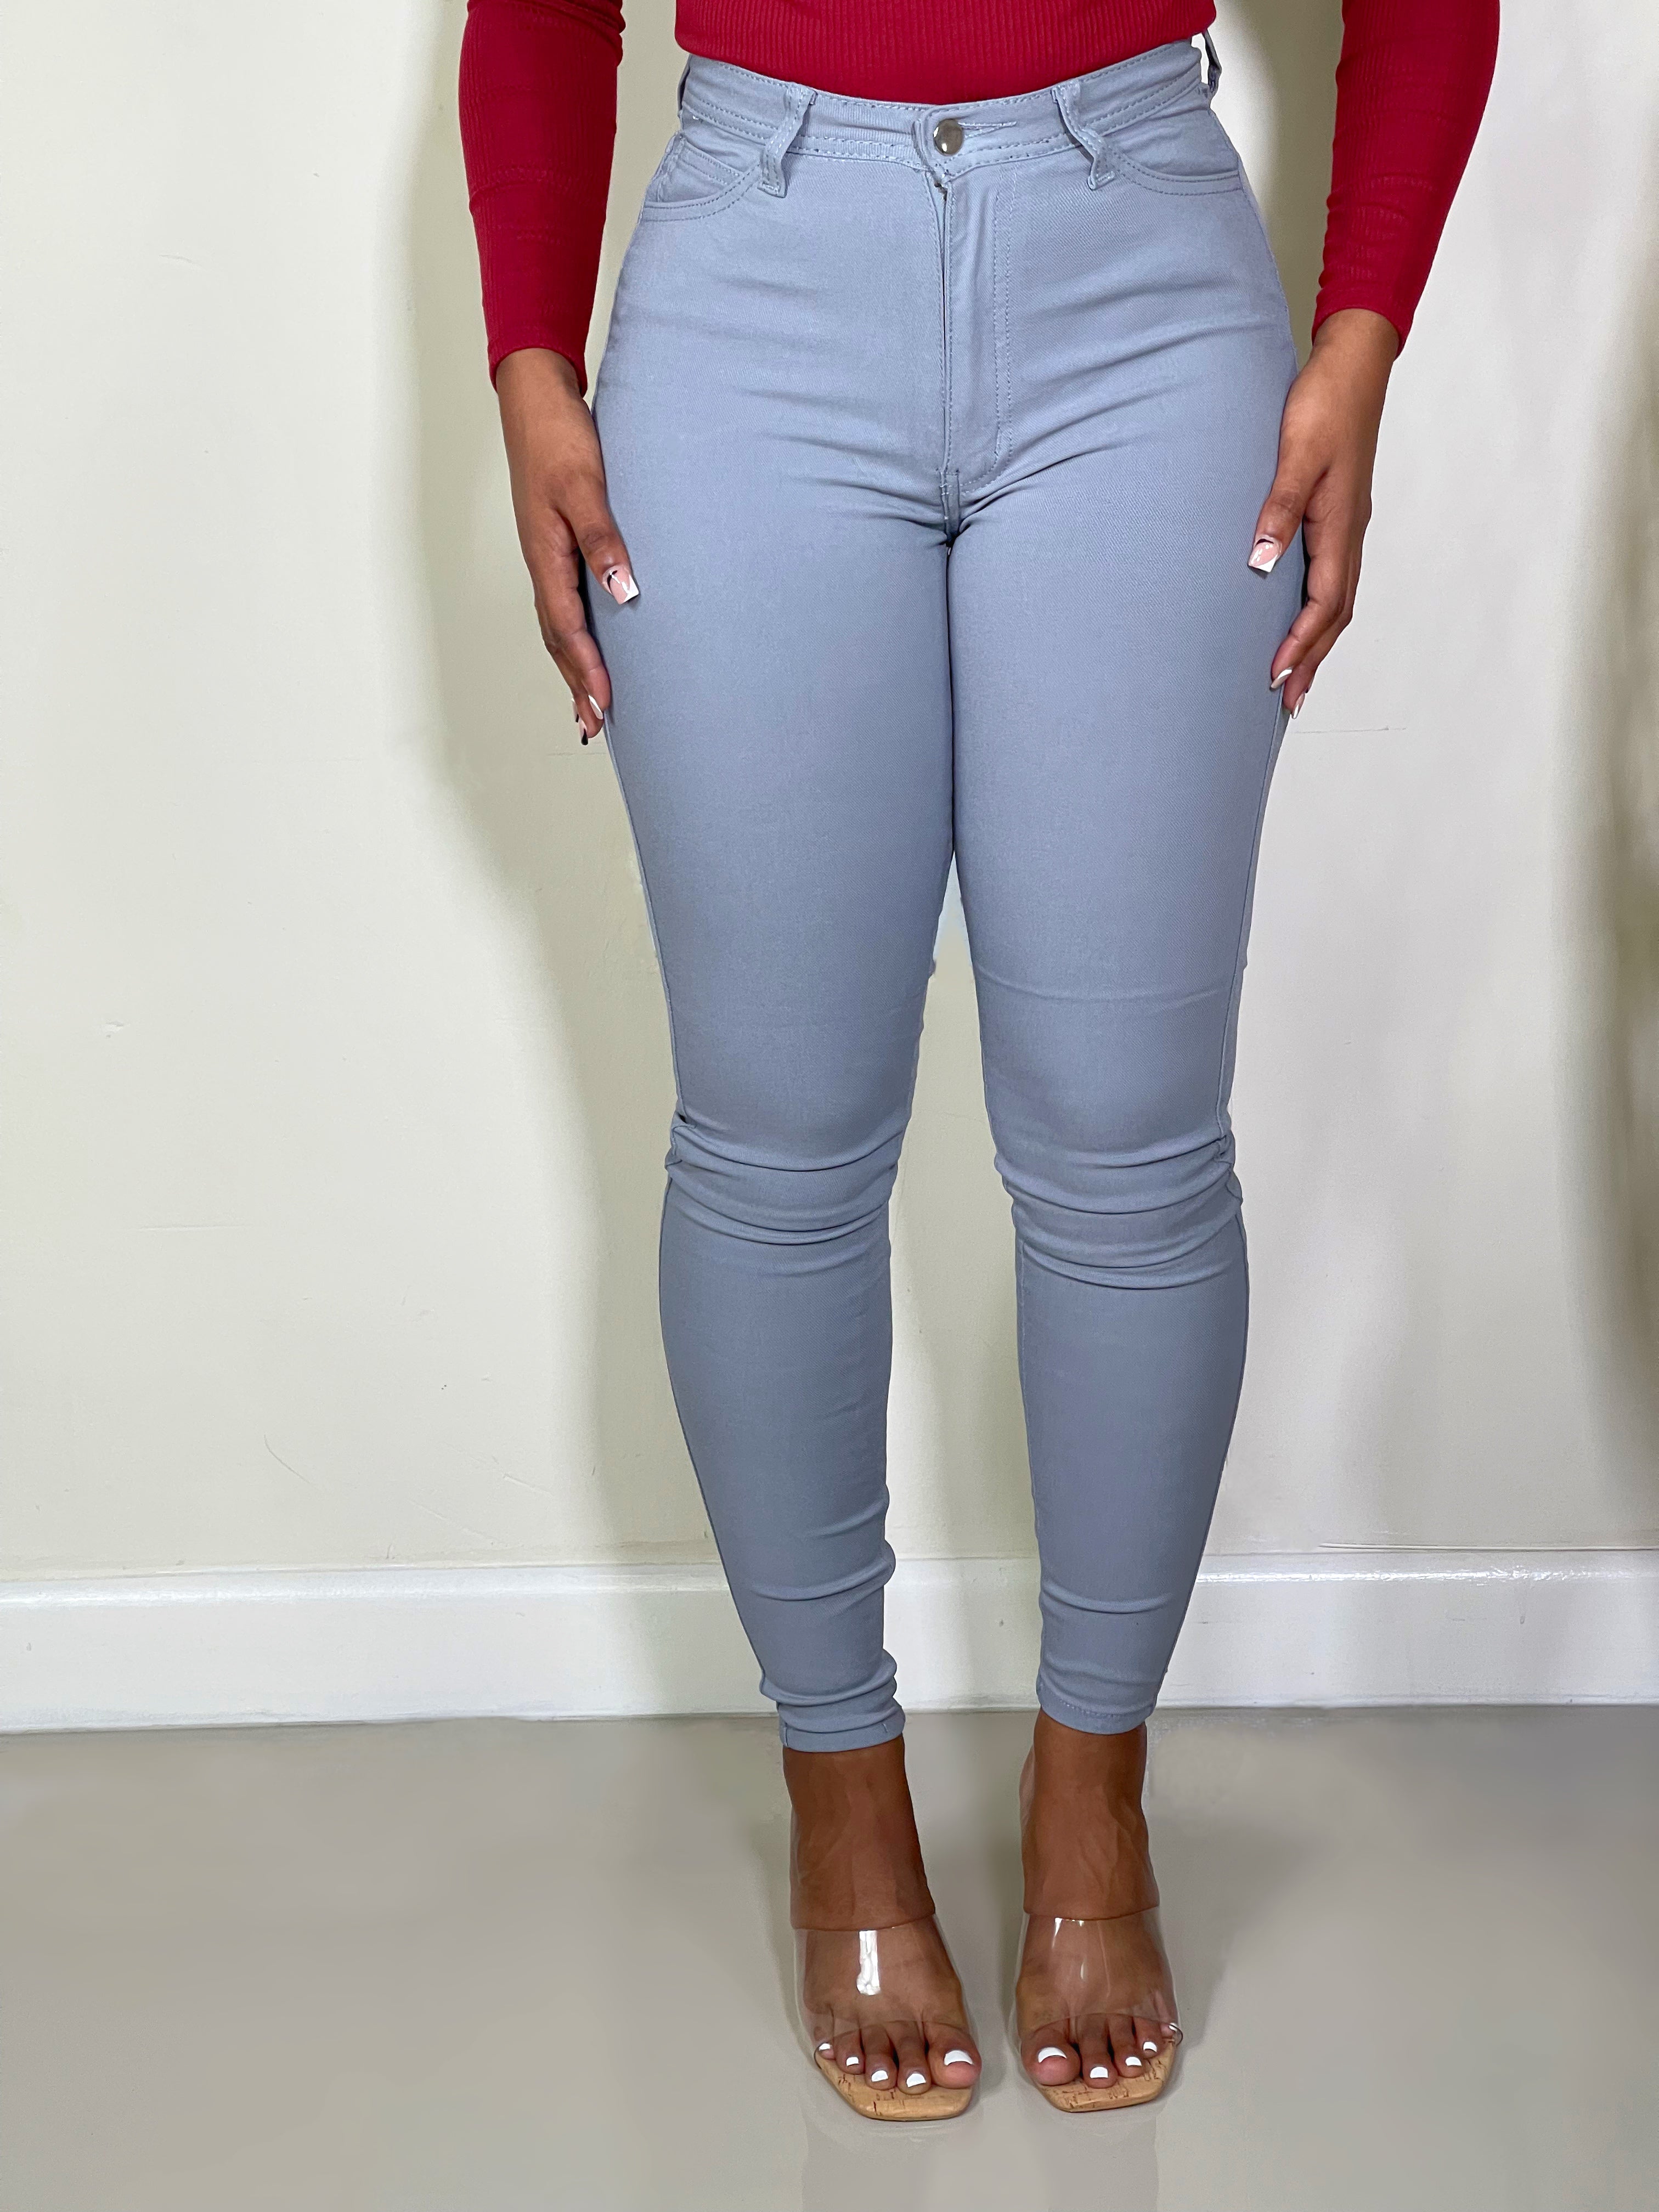 Women's Classic High Waist Skinny Jeans in Light Blue Wash Size 3 by Fashion Nova